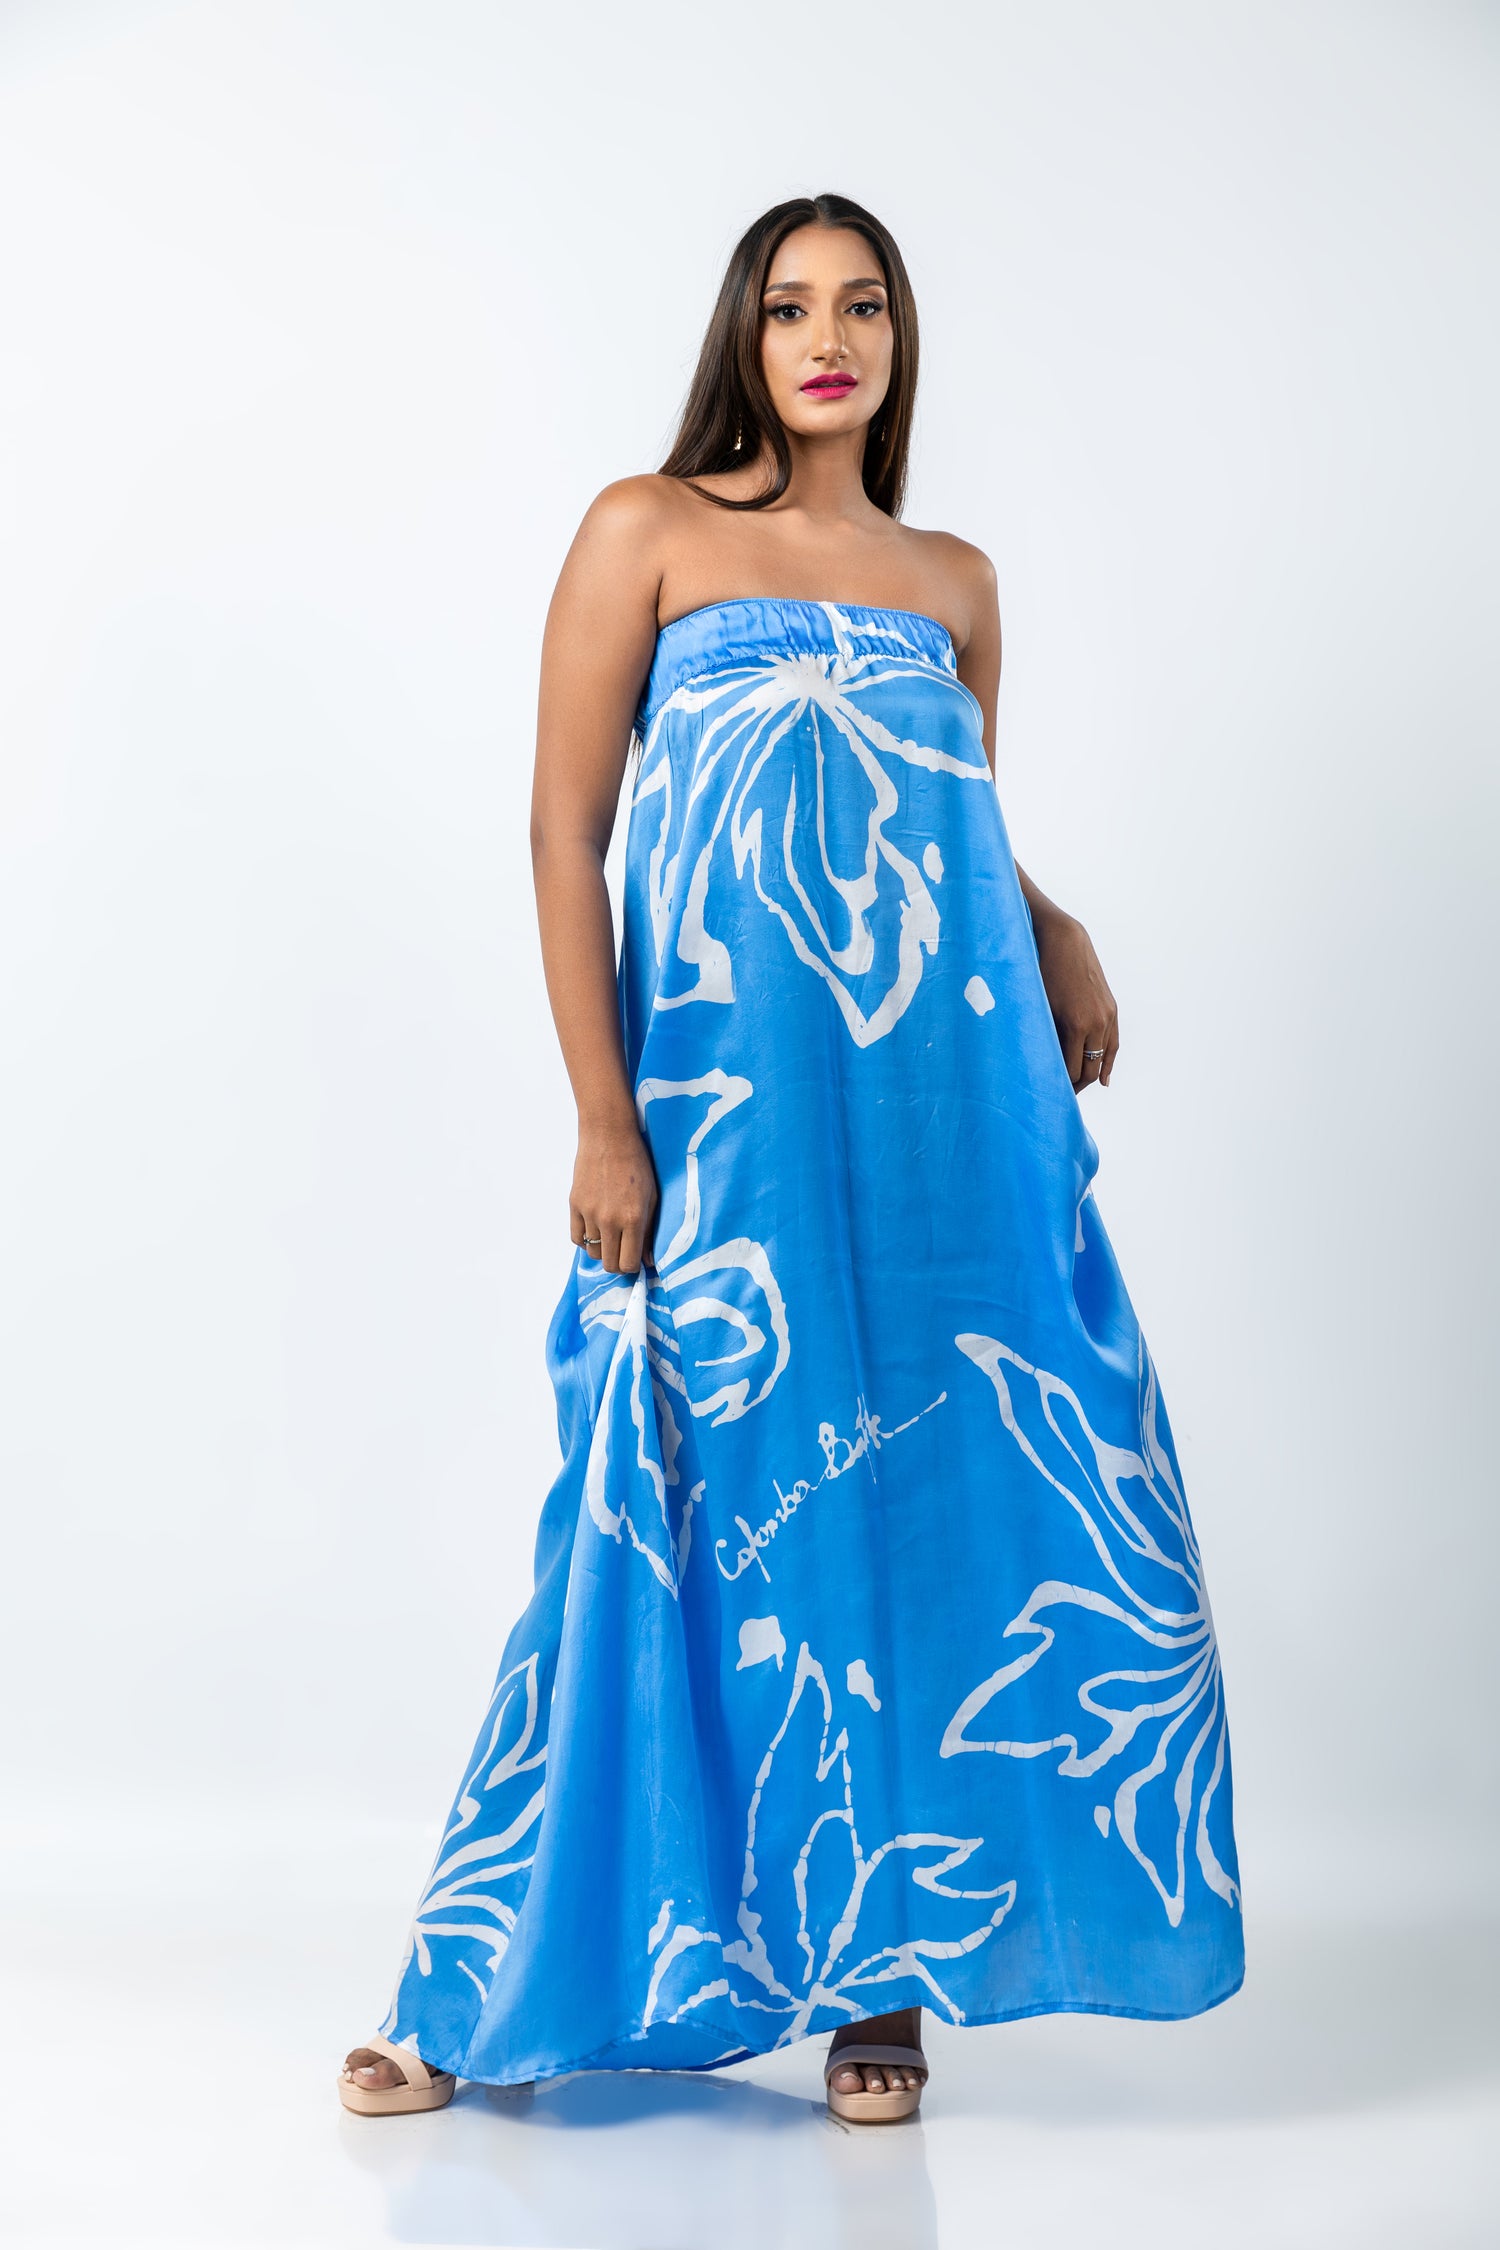 Ravishing Blue Floral Tube Dress